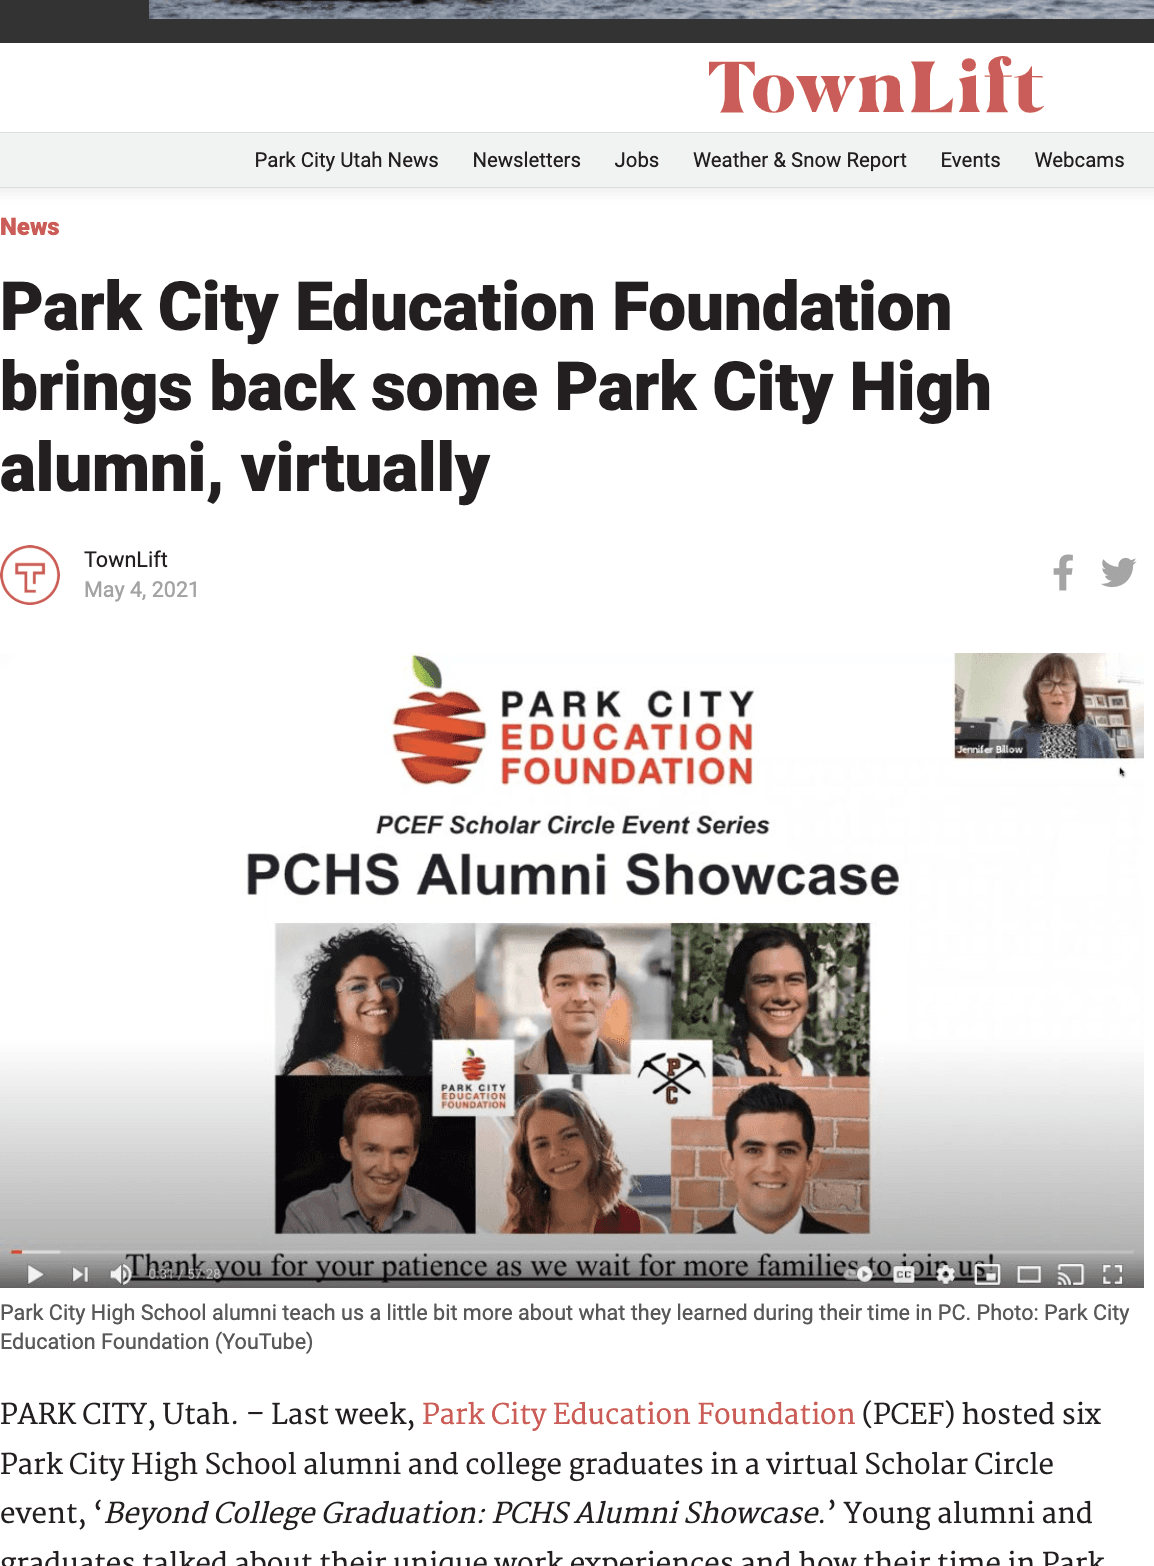 Park City Education Foundation Brings Back Some Park City High Alumni, Virtually